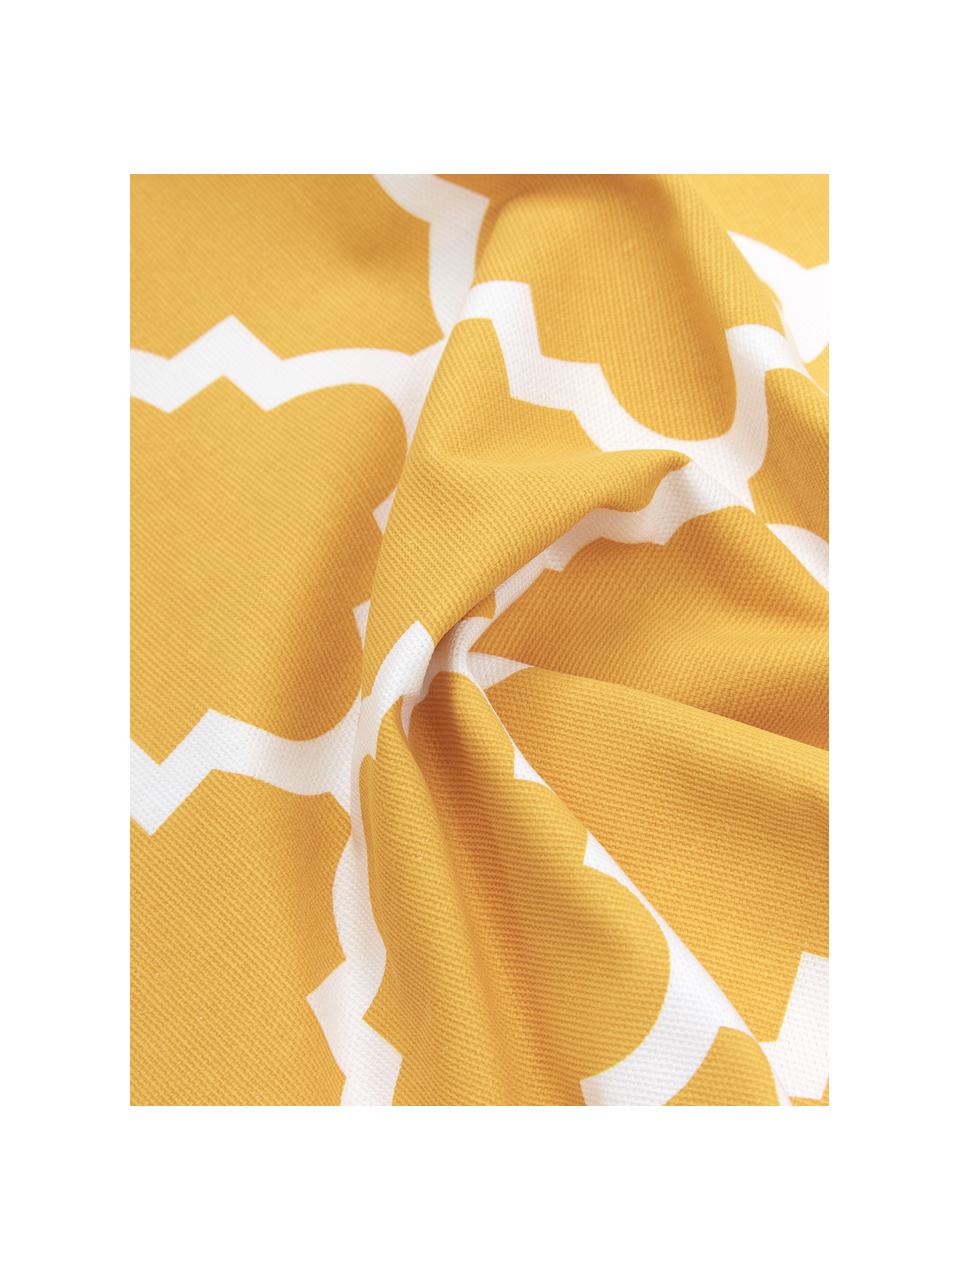 Povlak na polštář s grafickým vzorem Lana, Hořčičná žlutá, bílá